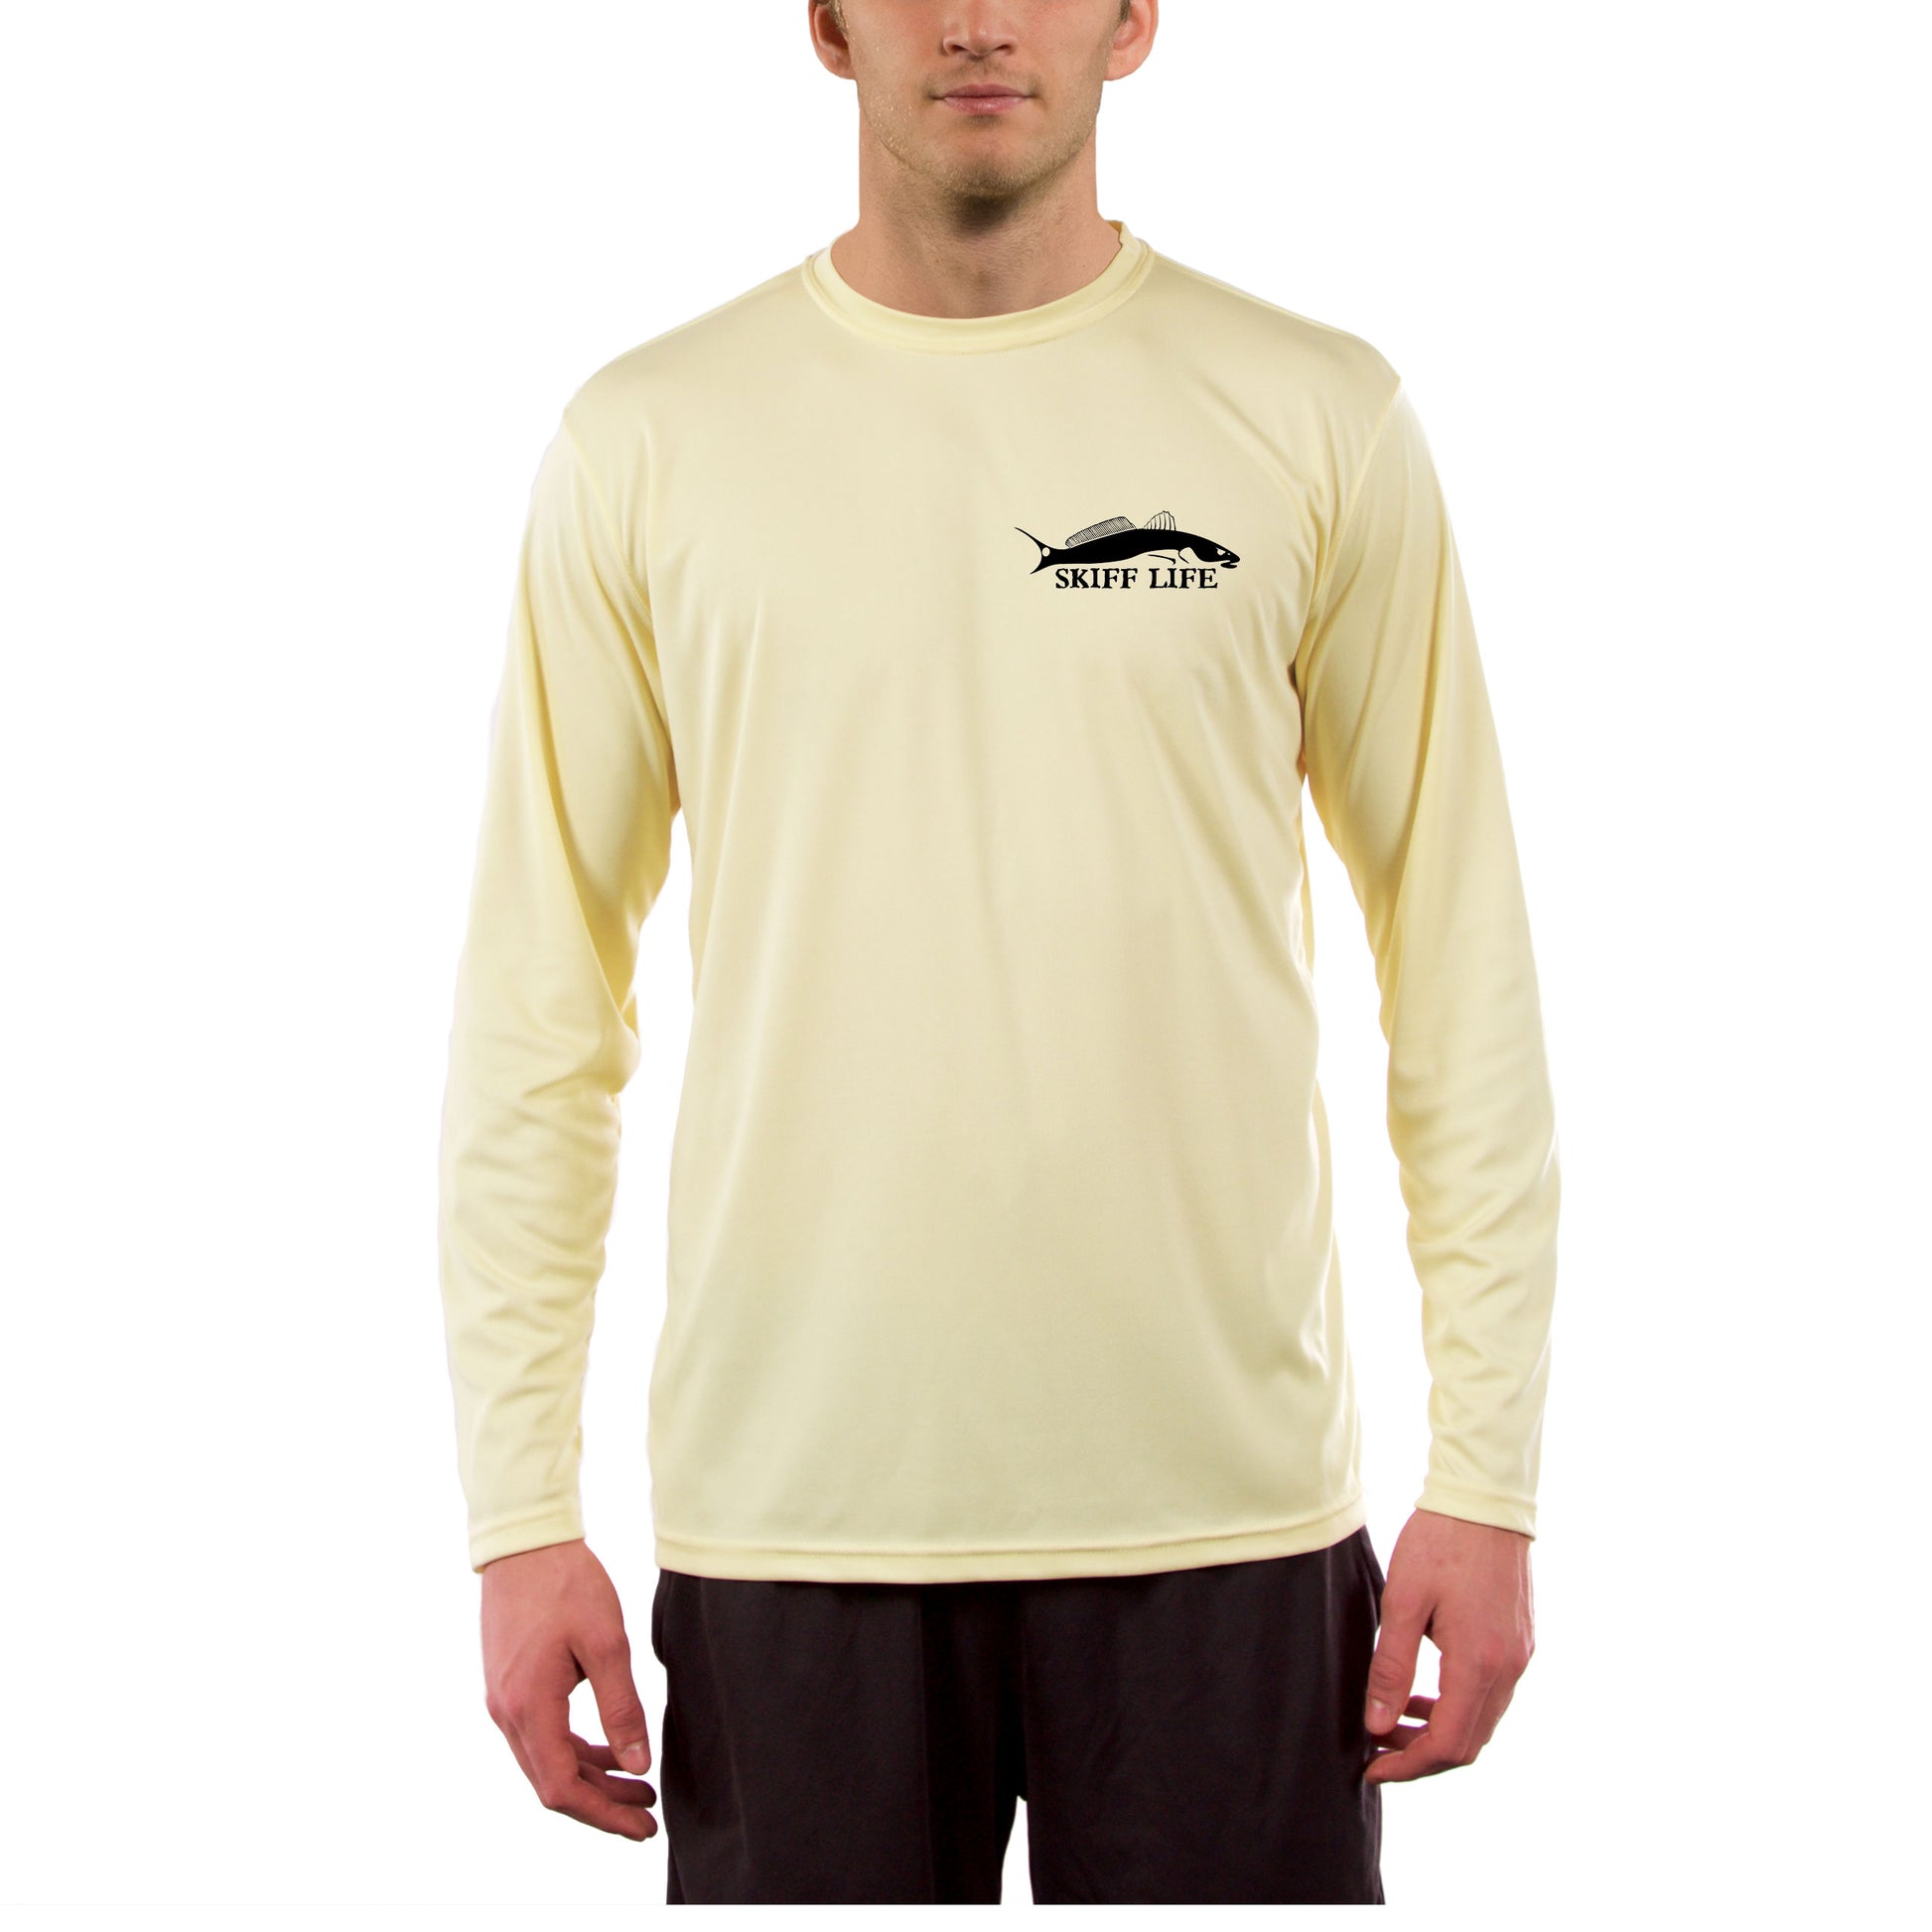 Mahi-mahi with Flying Fish Fishing Shirts for Men Featuring Dorado / Dolphinfish Art by Randy McGovern X-Large / Seagrass